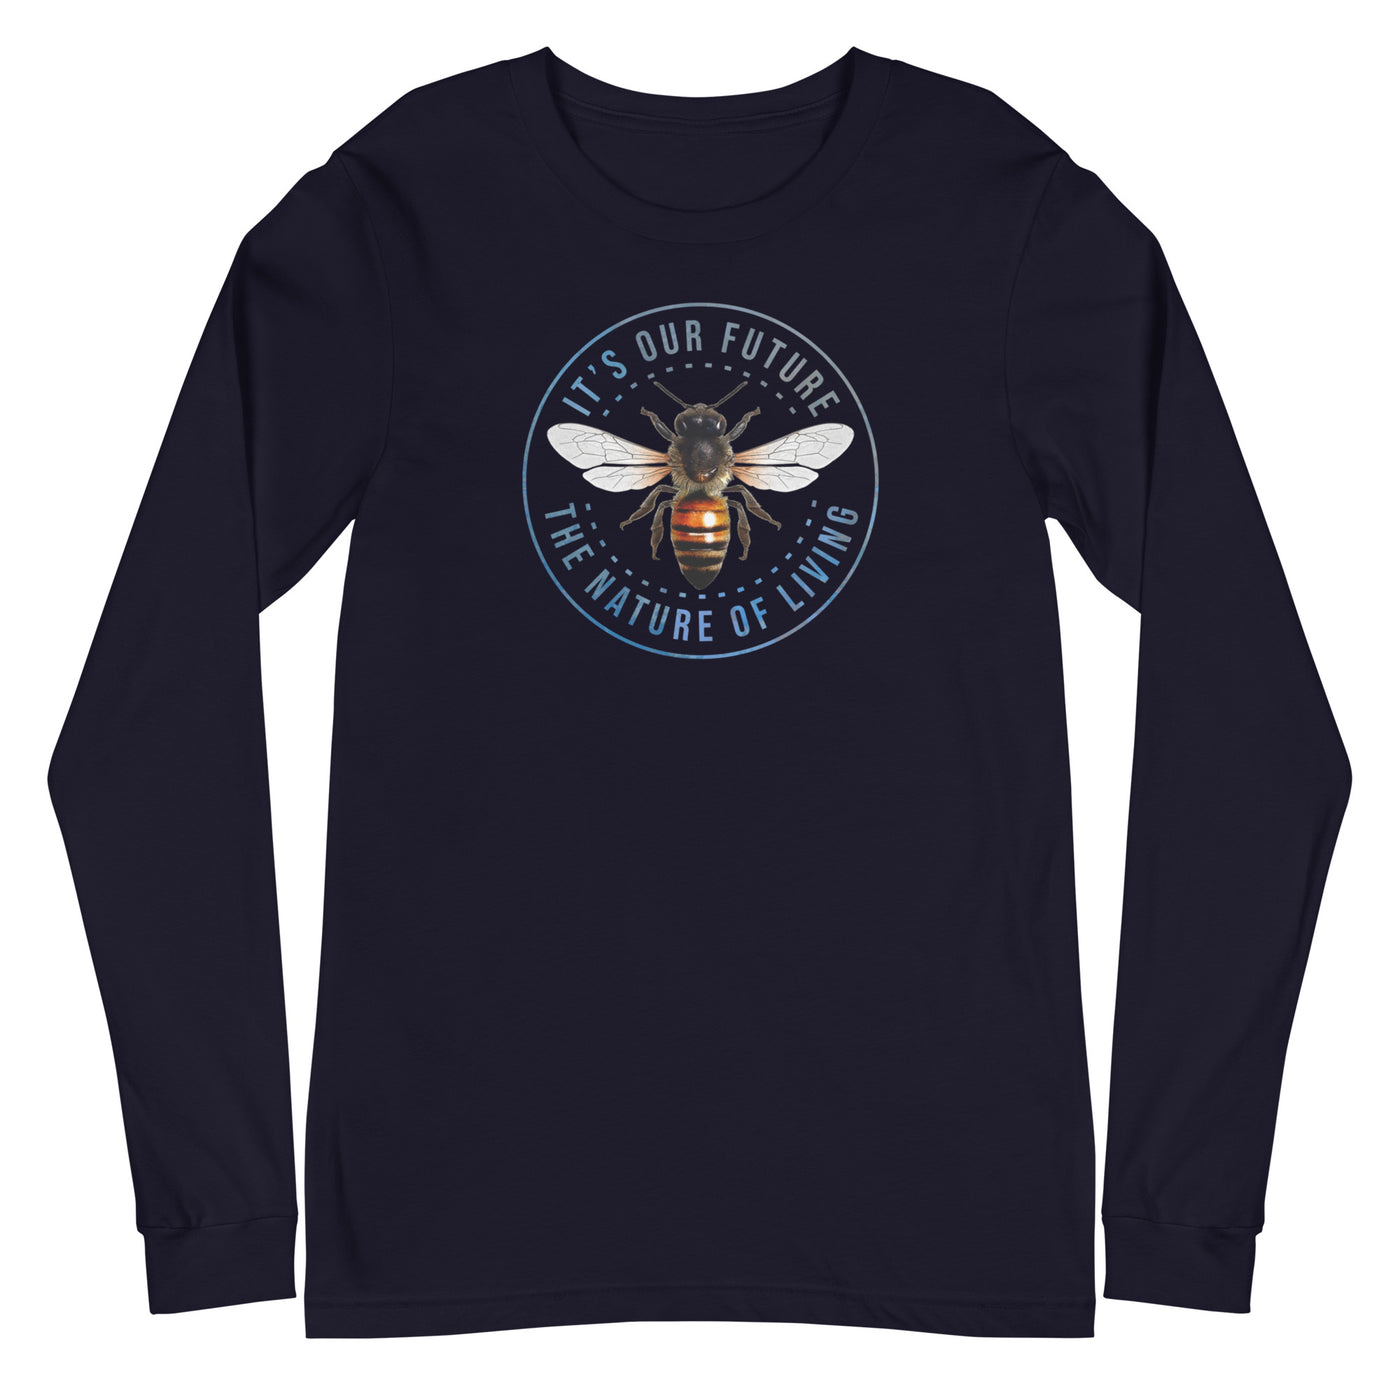 Bee - Long Sleeve T-Shirt